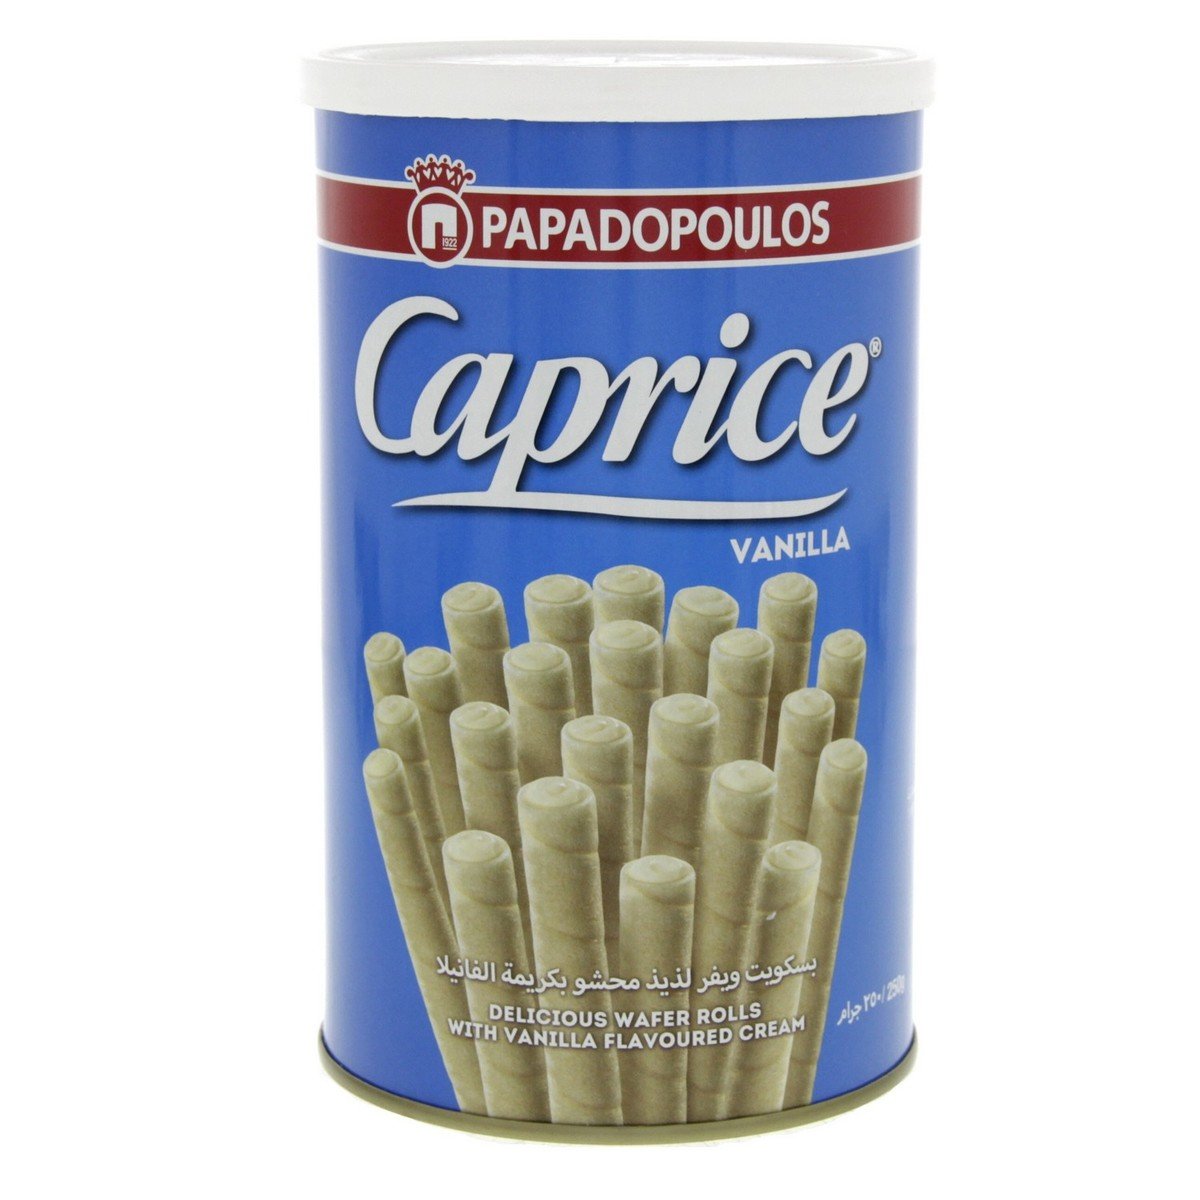 Caprice classic - Papadopoulos - 400gr